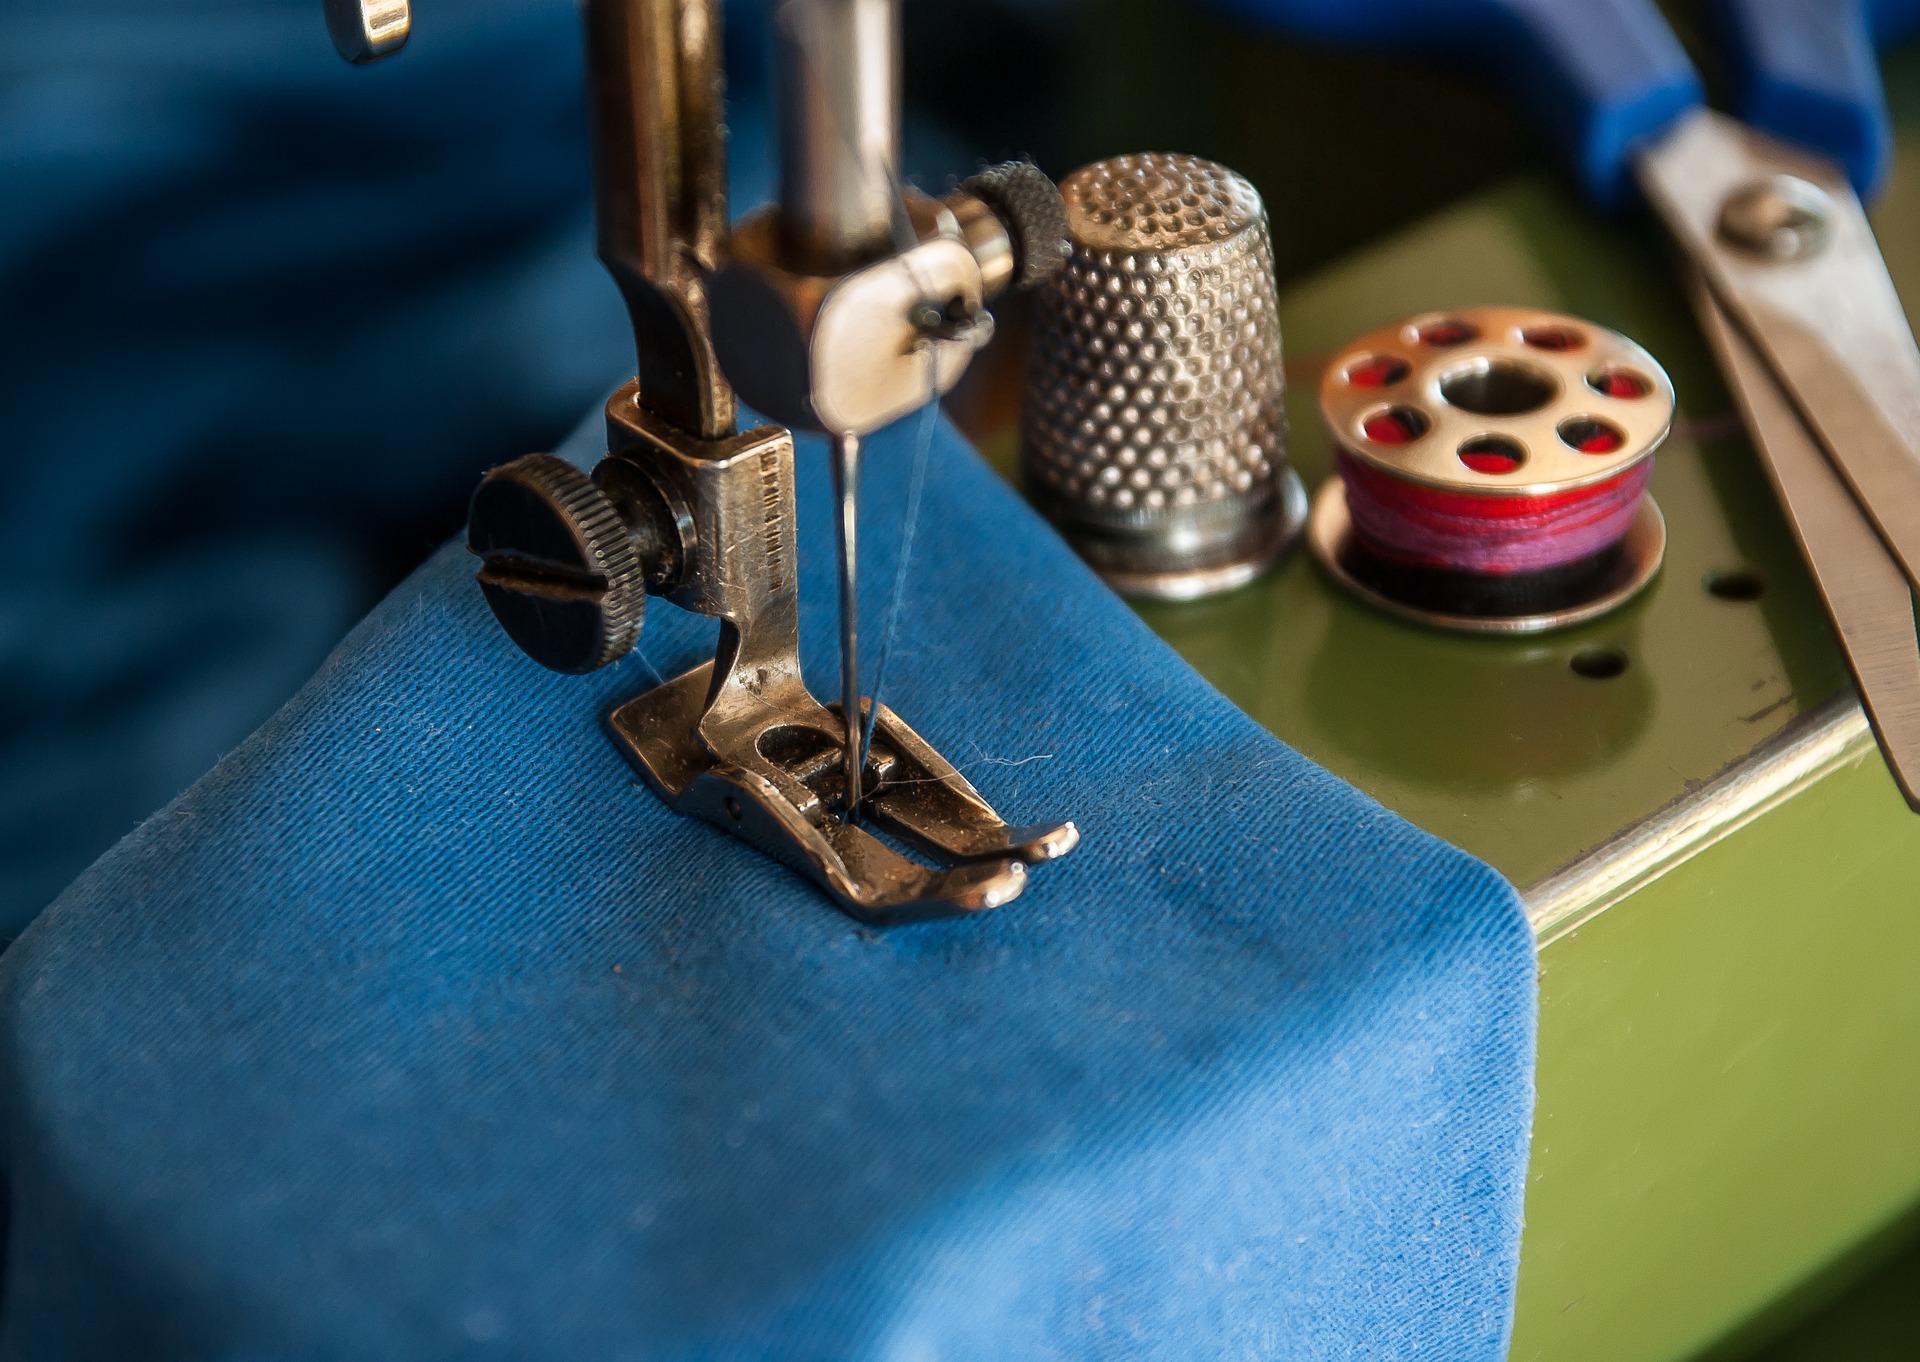 sewing-machine-1369658_1920